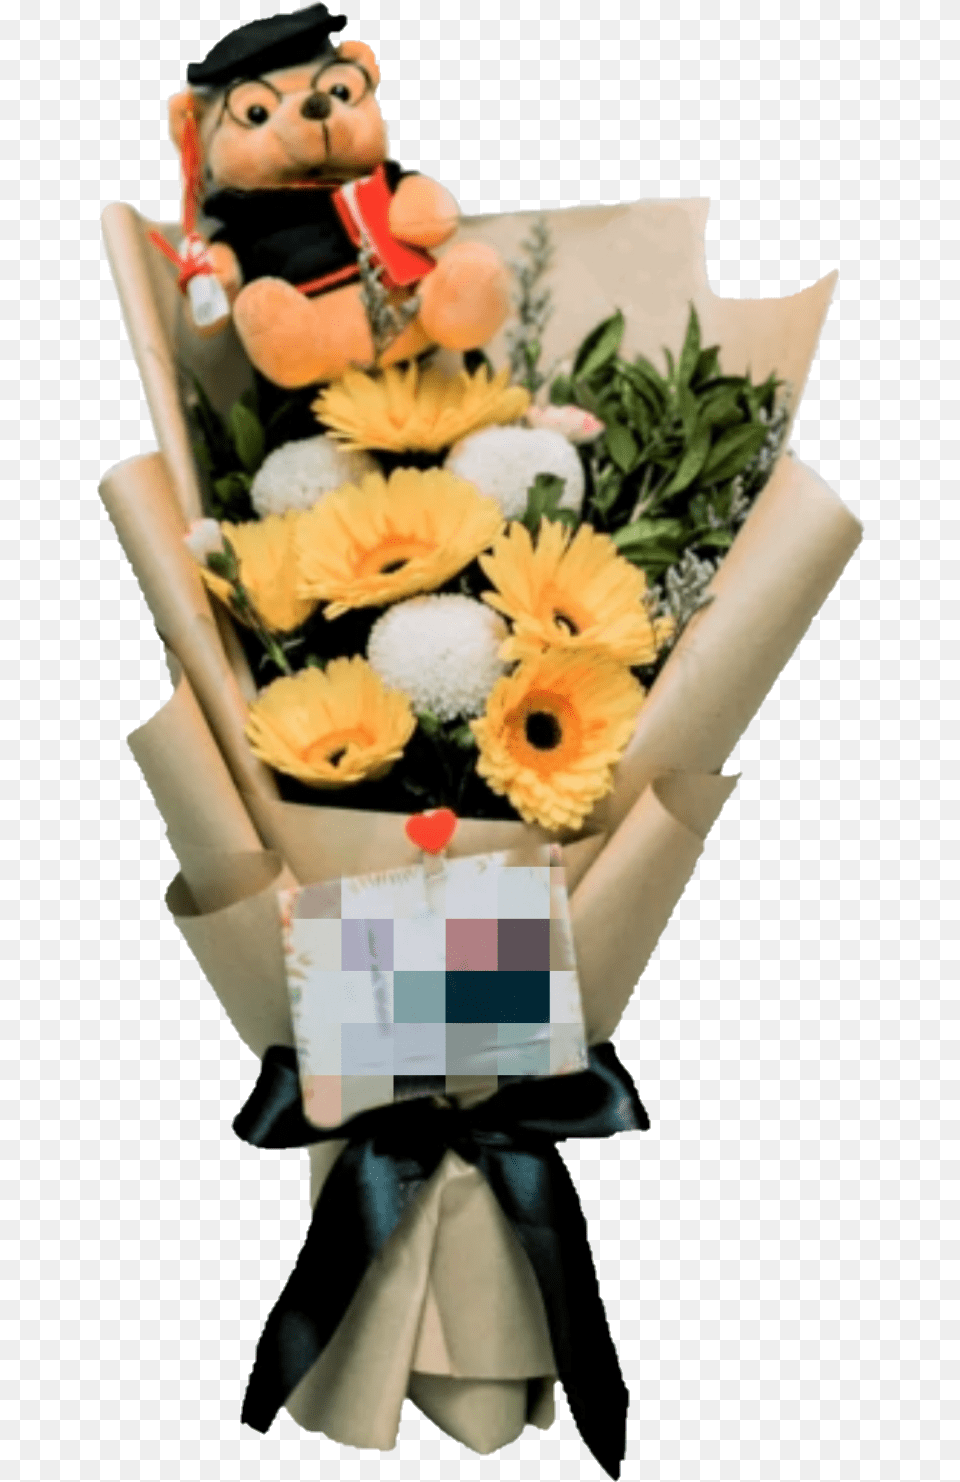 Graduation Bouquet With Bear Graduation Flower Bouquet, Flower Bouquet, Plant, Flower Arrangement, Wedding Png